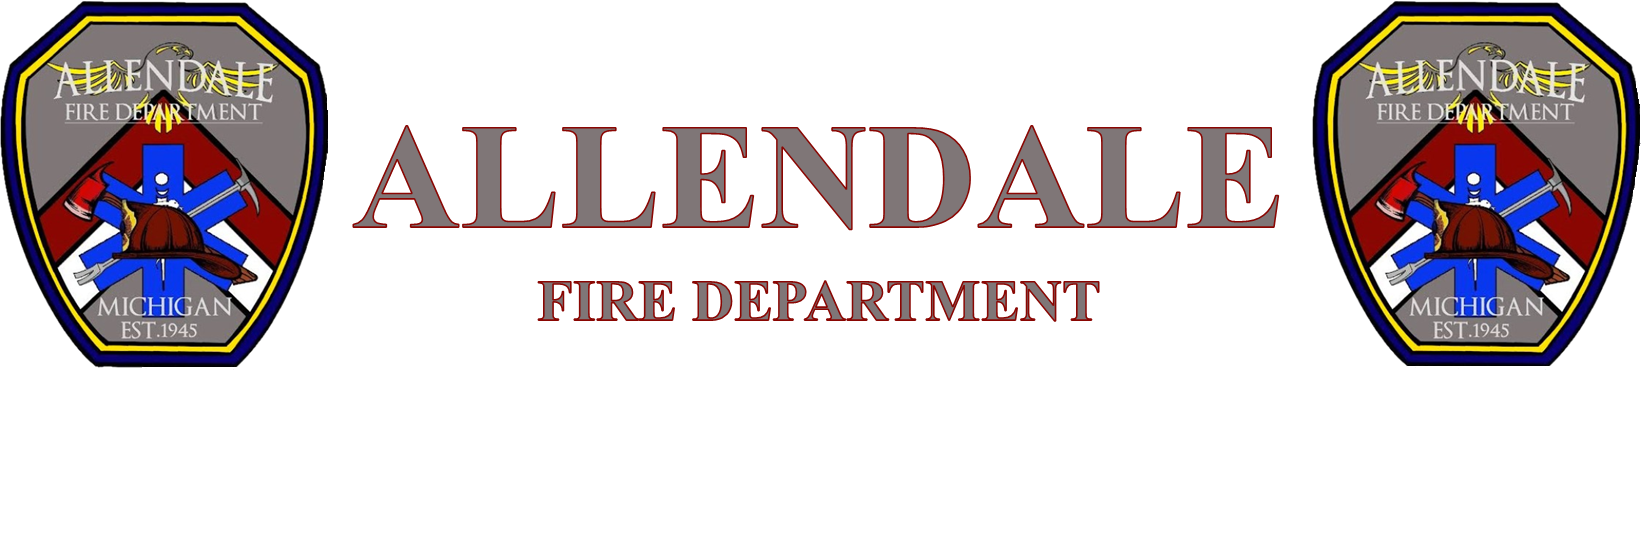 ALLENDALE FIRE DEPARTMENT